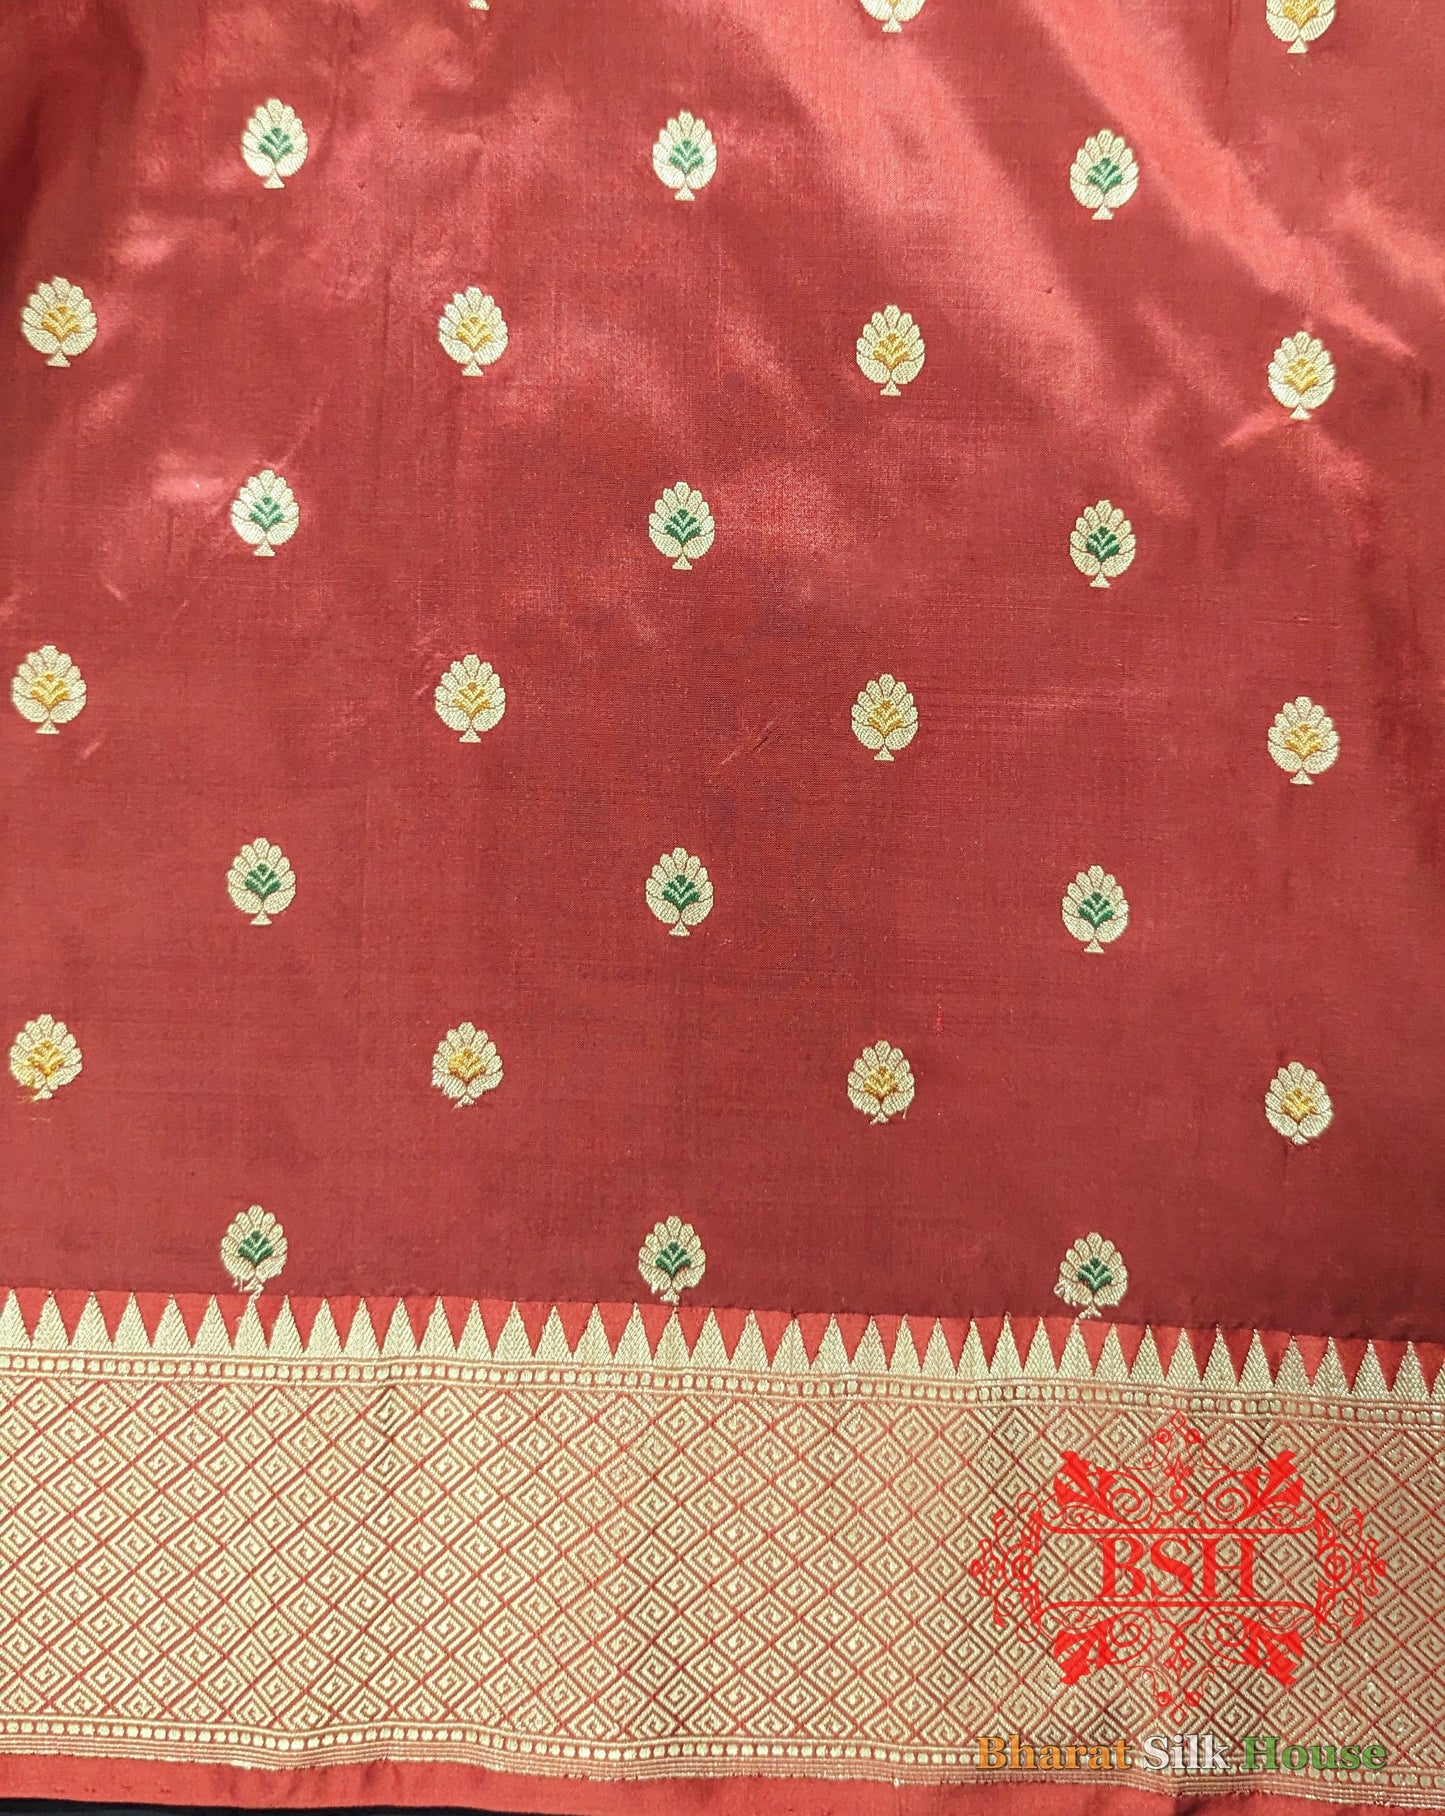 Pure Banarasi  Handloom  Silk  Meenakari Antique  Zari Saree In Shades Of  Violet Pure Kataan Silk Bharat Silk House